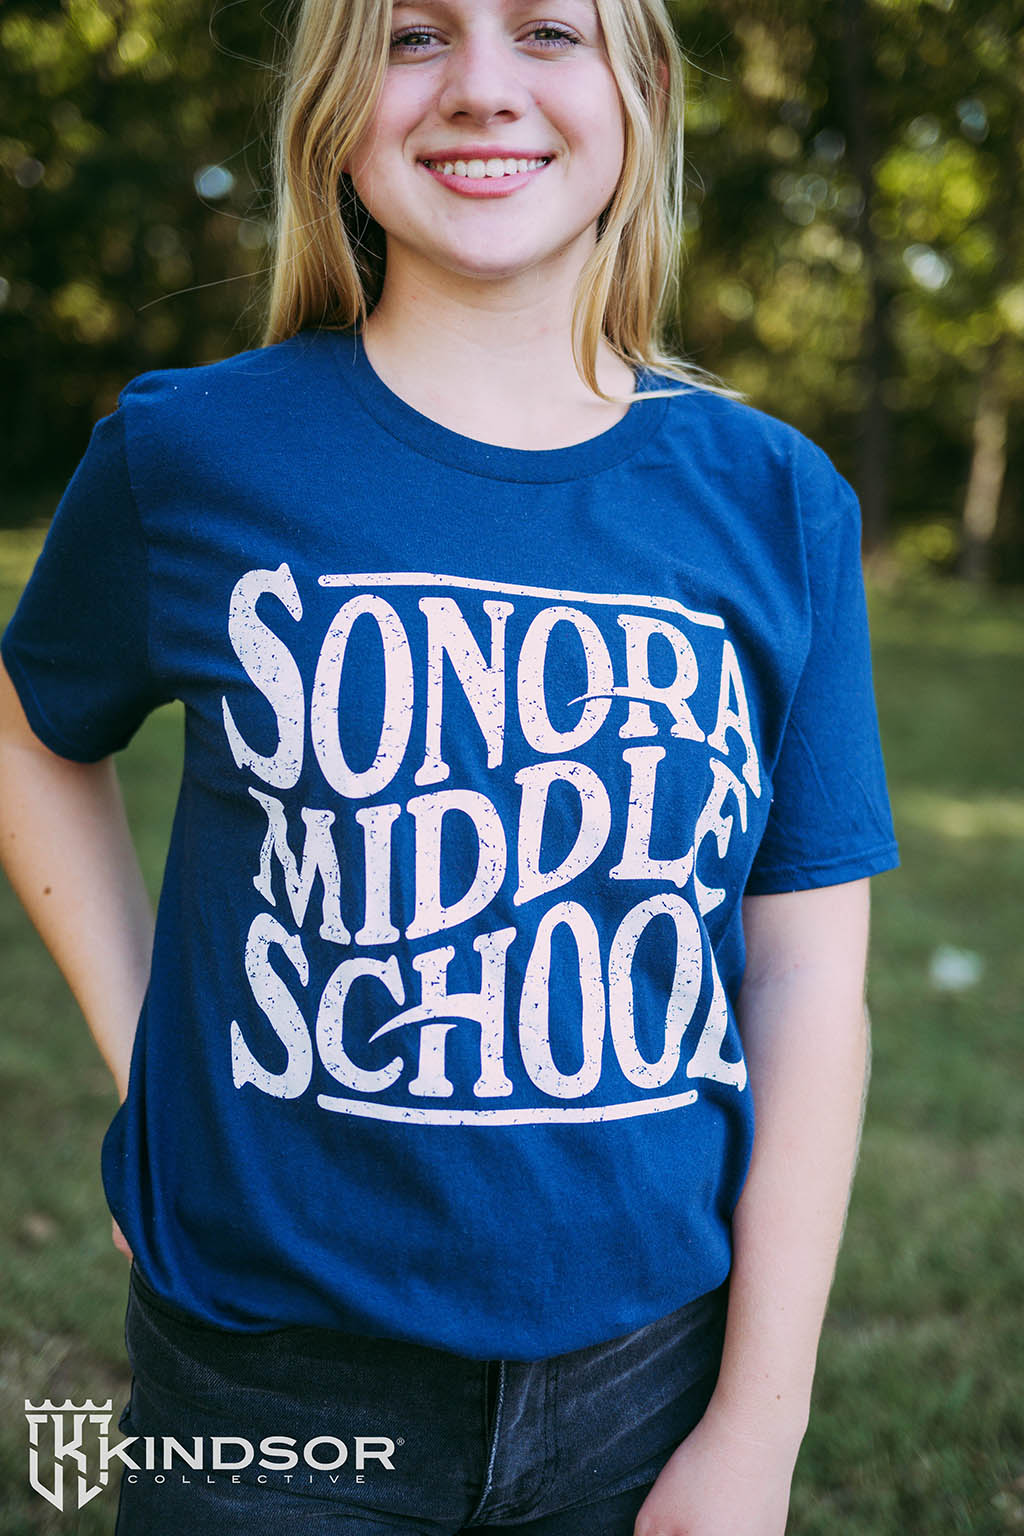 Sonora Middle School Tshirt